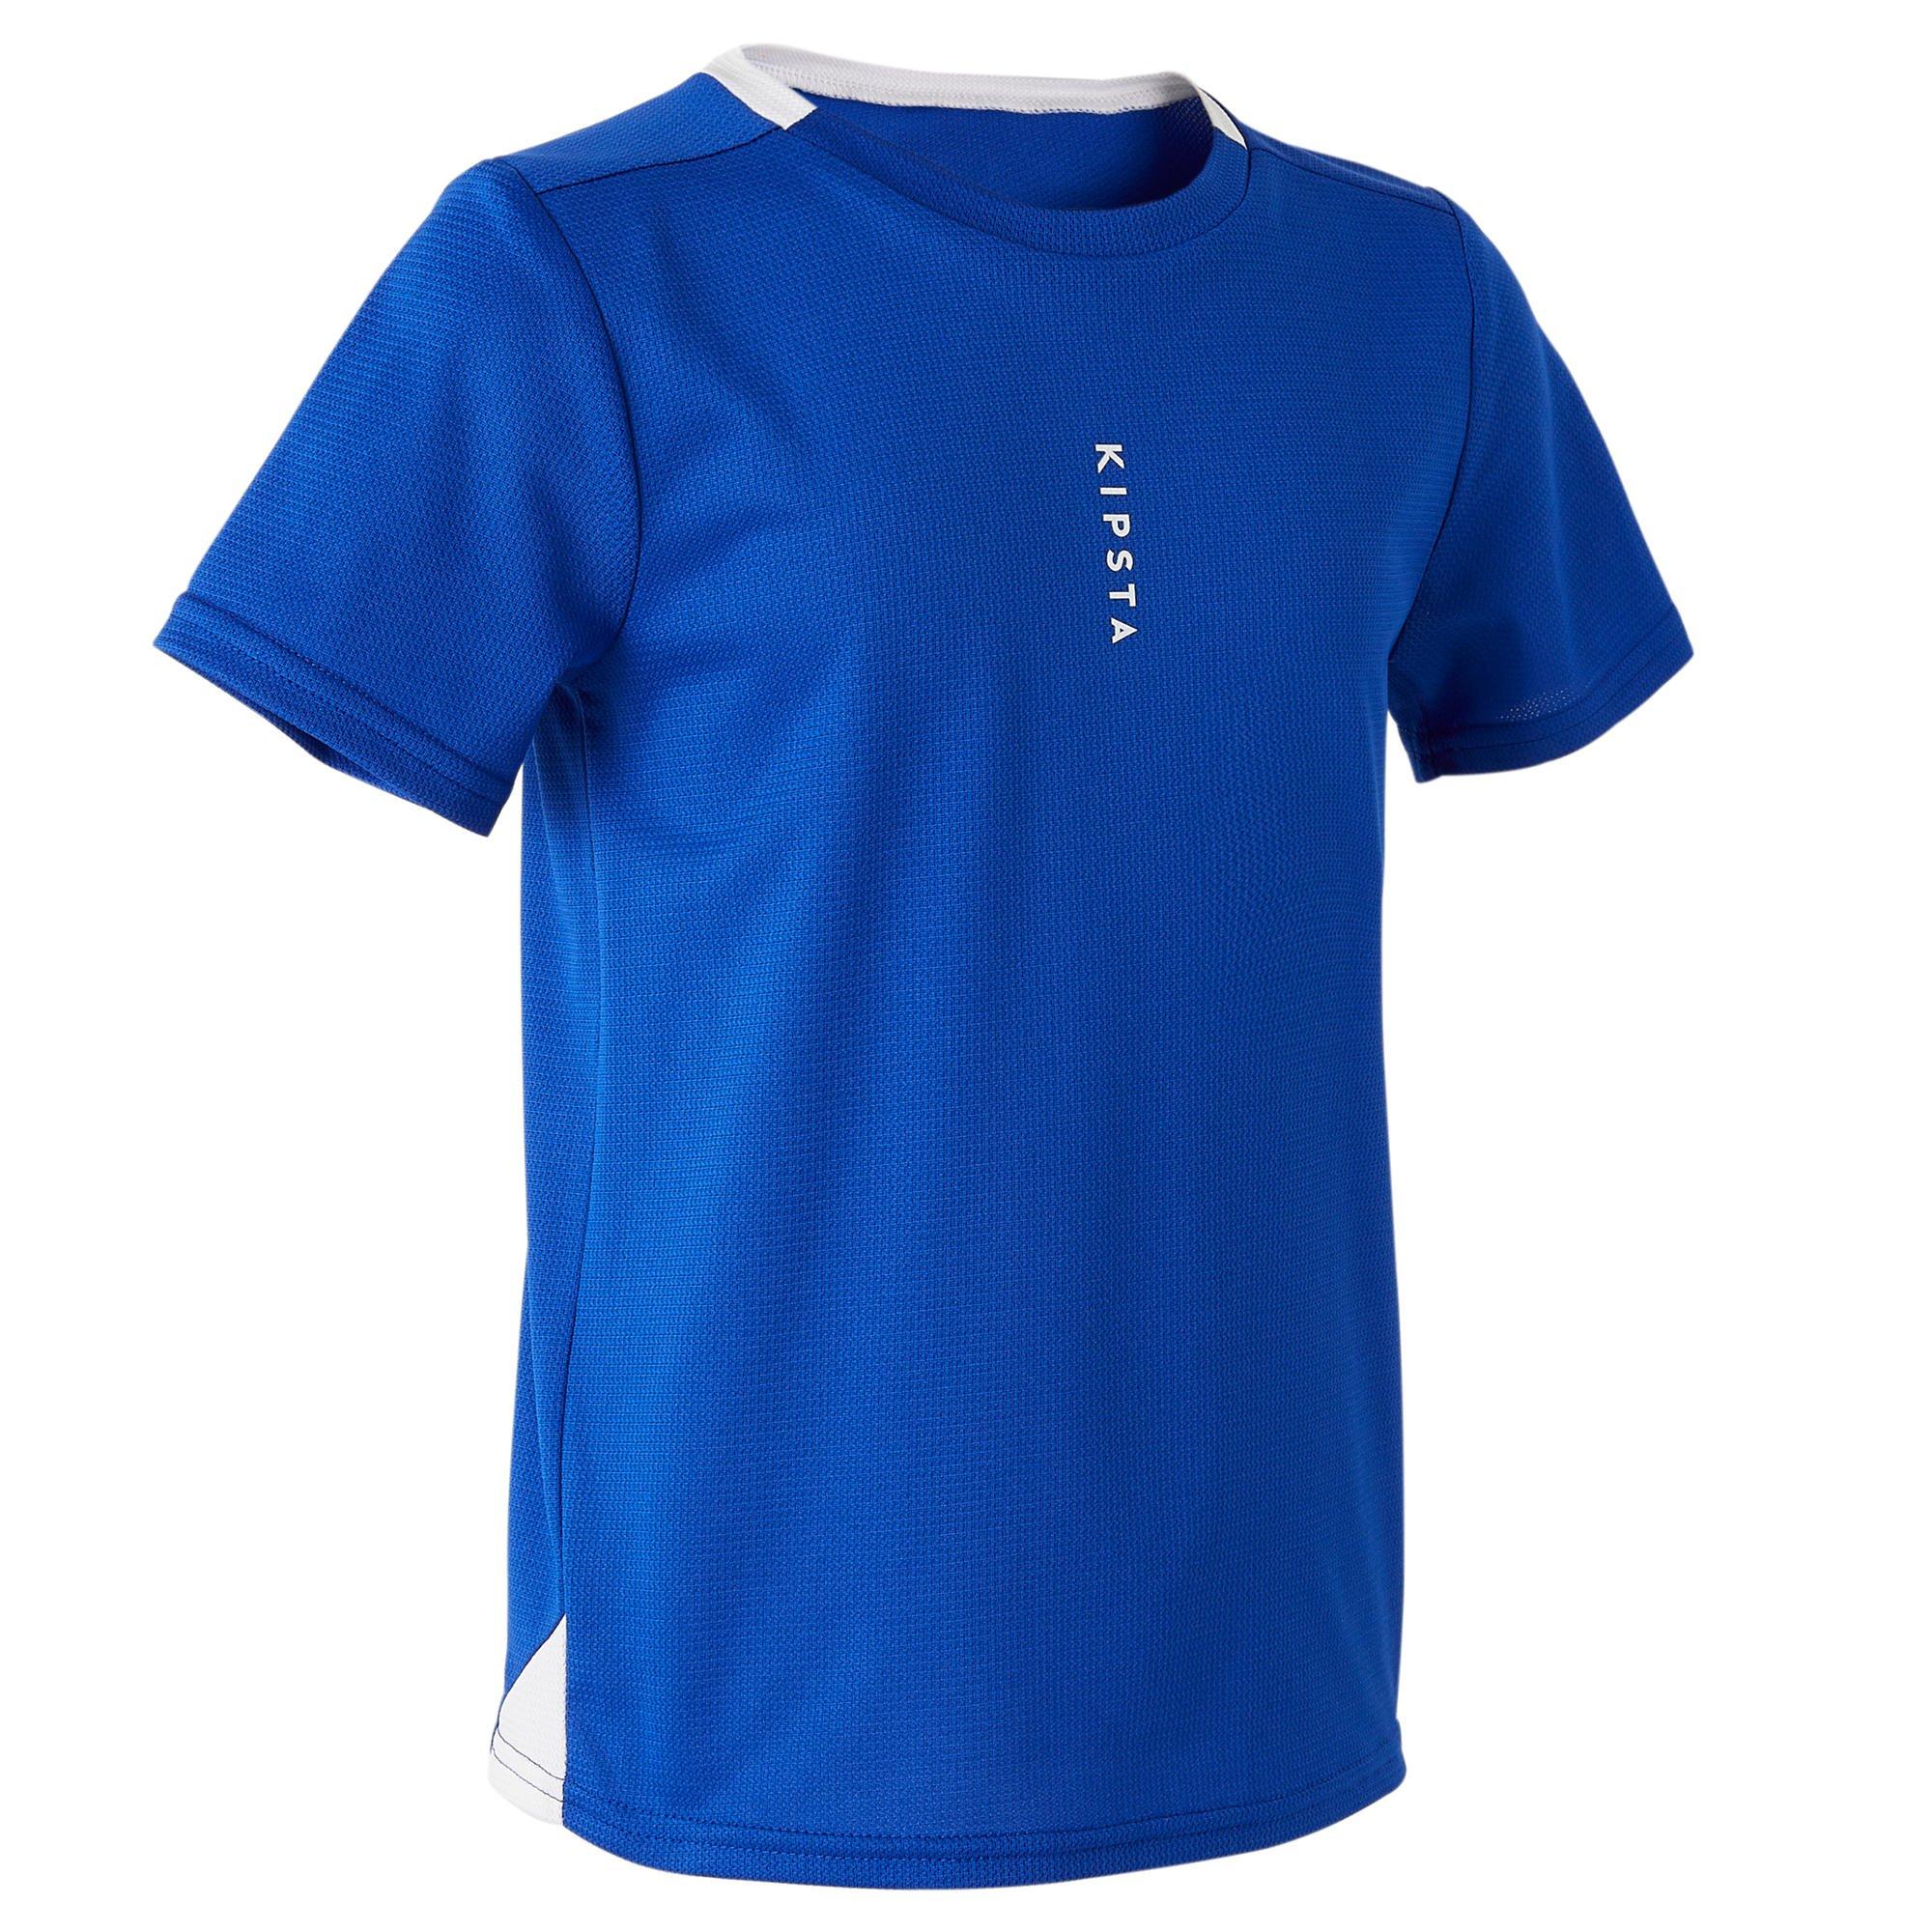 Decathlon Football Shirt Essential